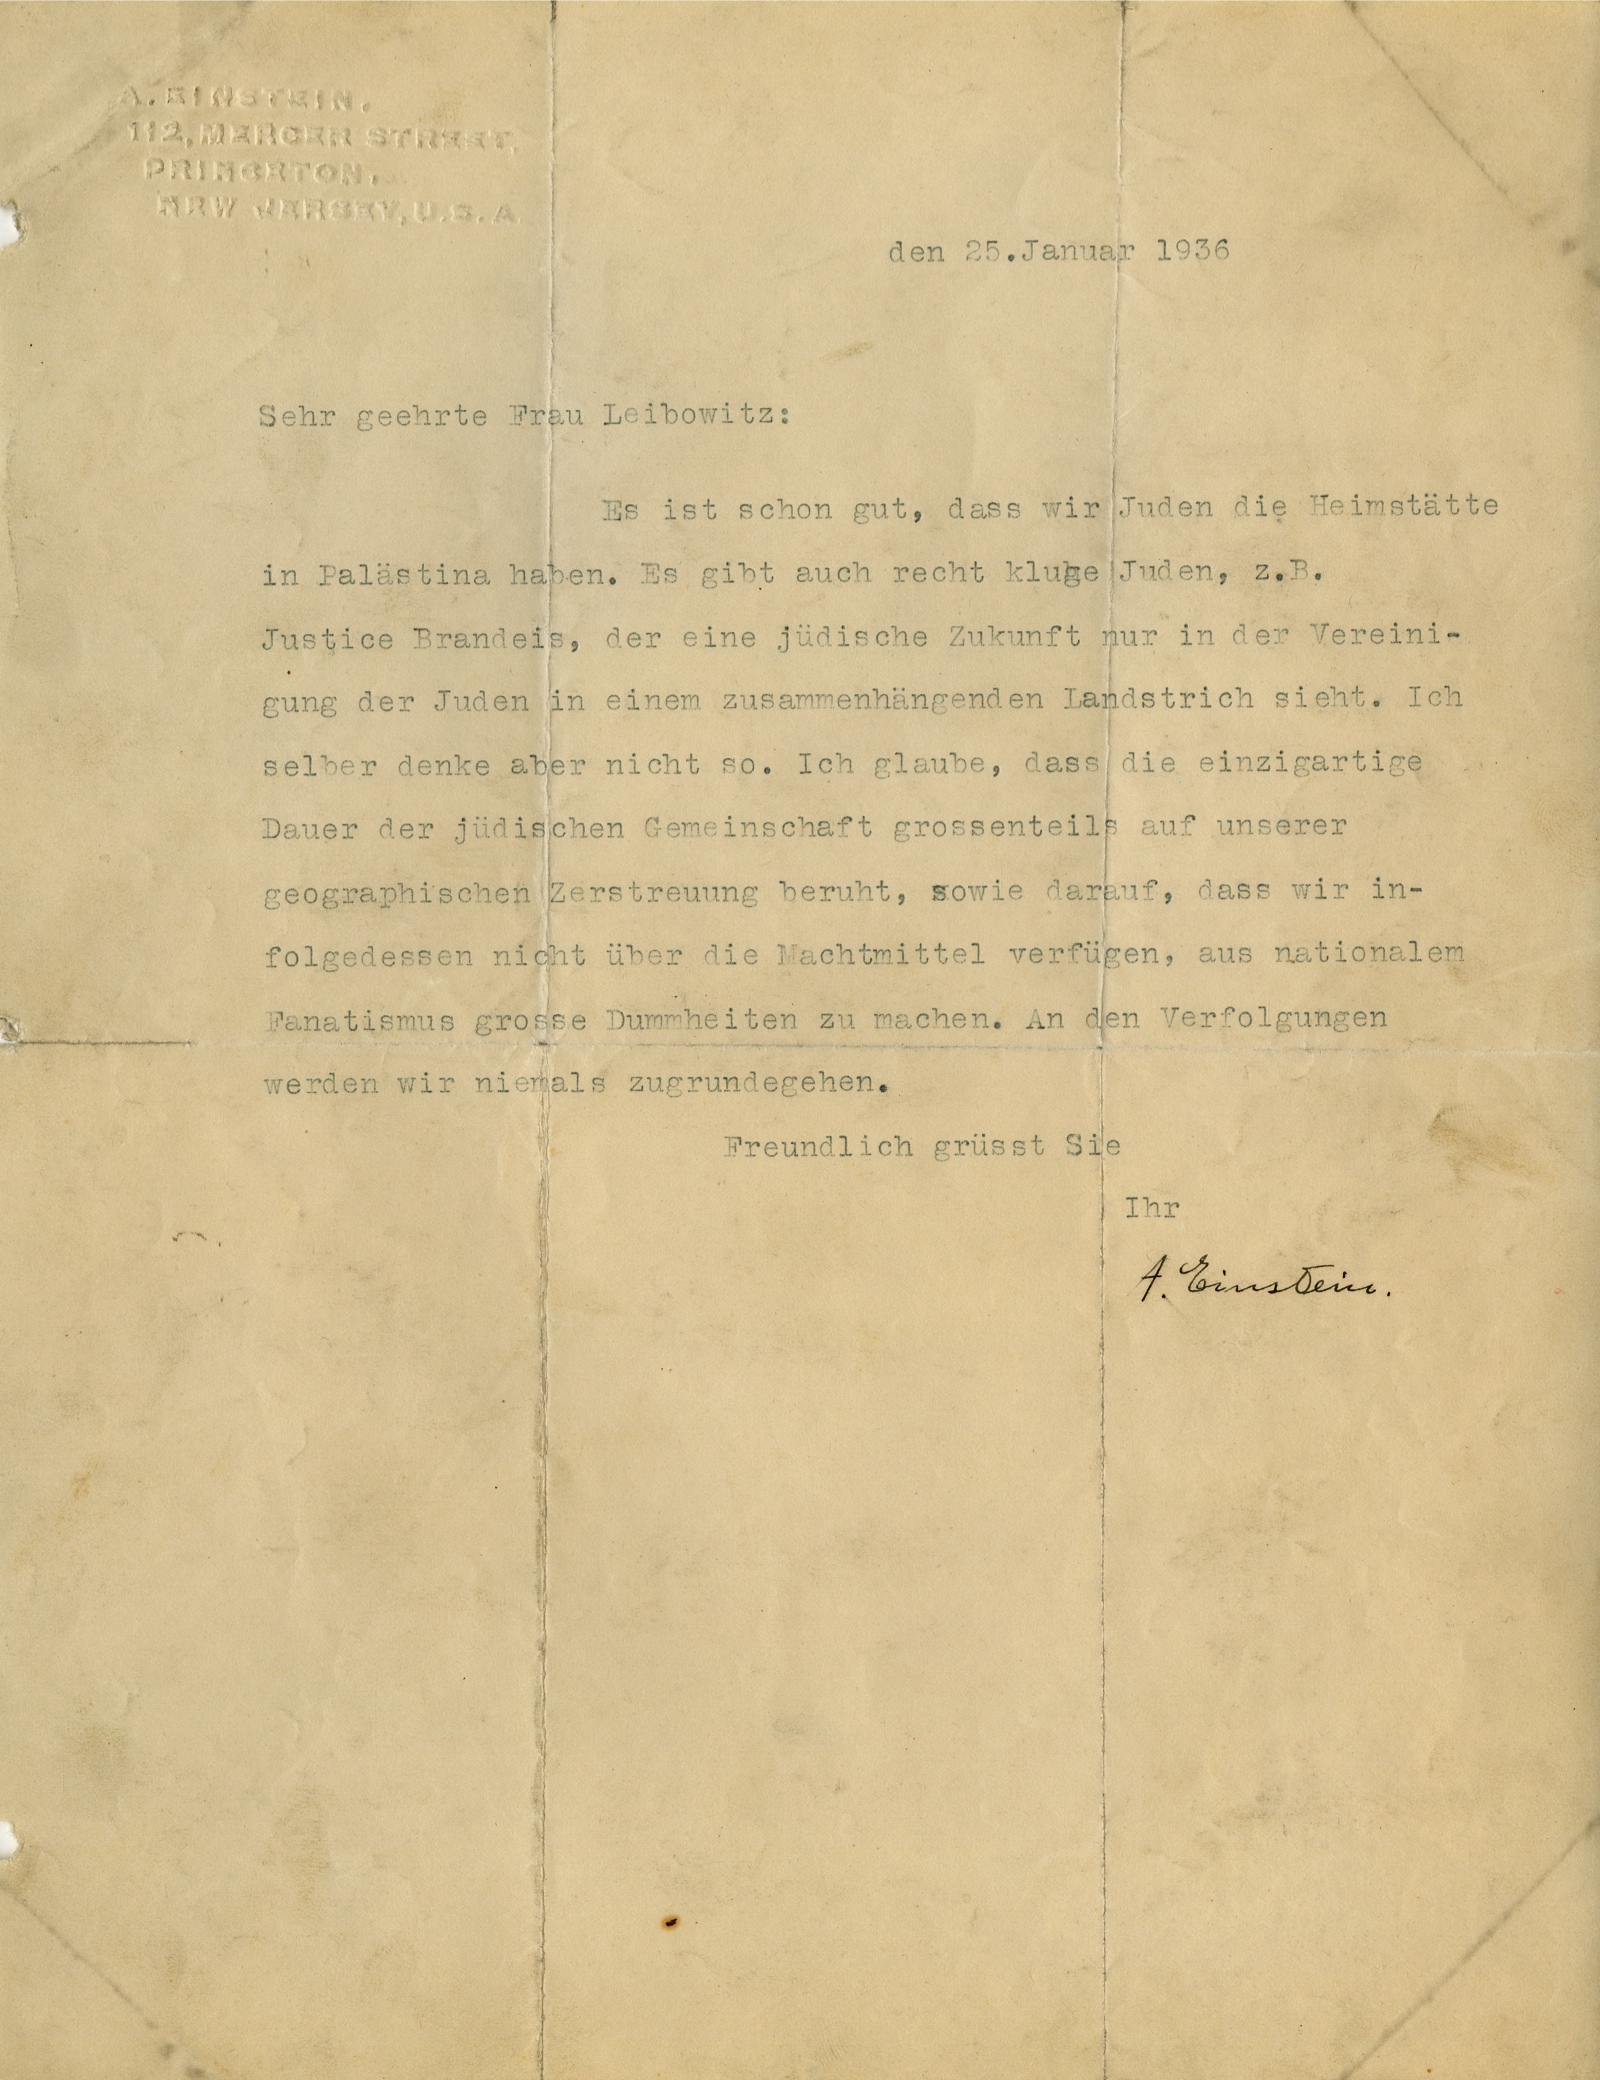 Albert Einstein Disagrees with Louis Brandeis; Argues that Palestine is Not the Key to Jewish Survival